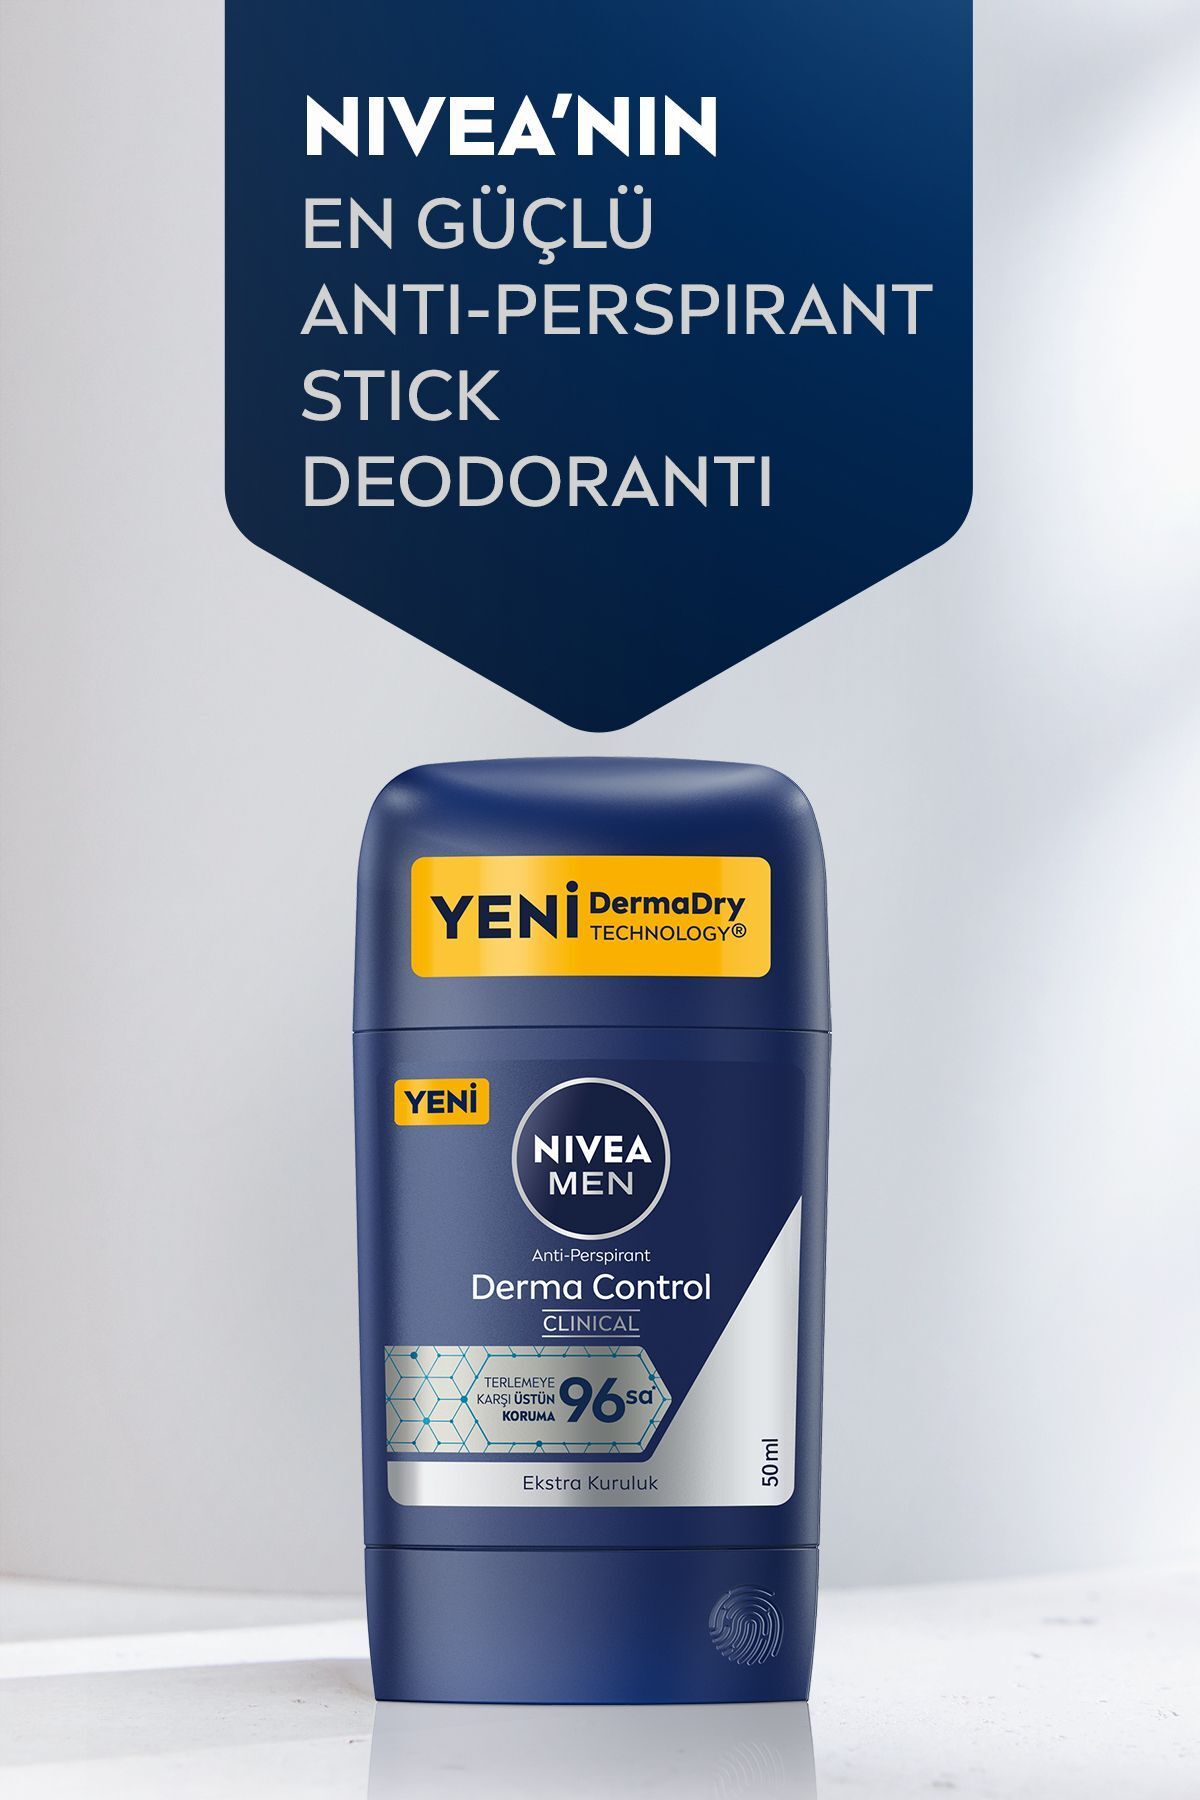 Men Erkek Stick Deodorant Derma Control Clinical 50 Ml,96 Saat Üstün Koruma, C Vitamini_2